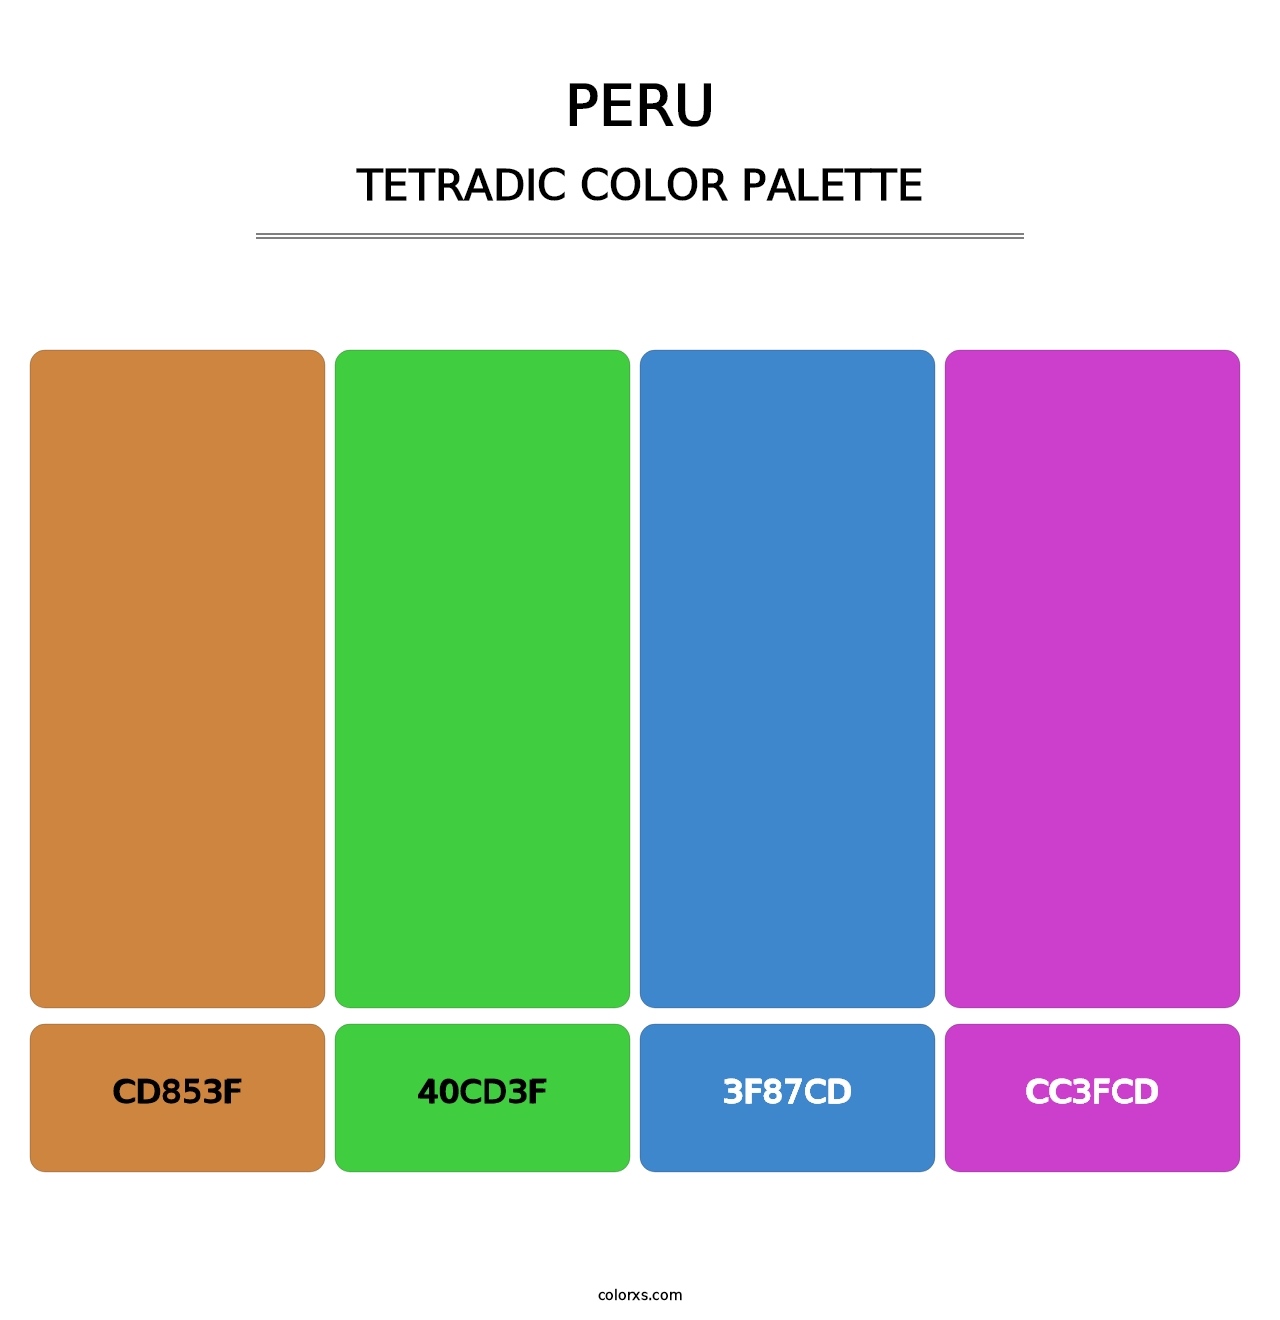 Peru - Tetradic Color Palette